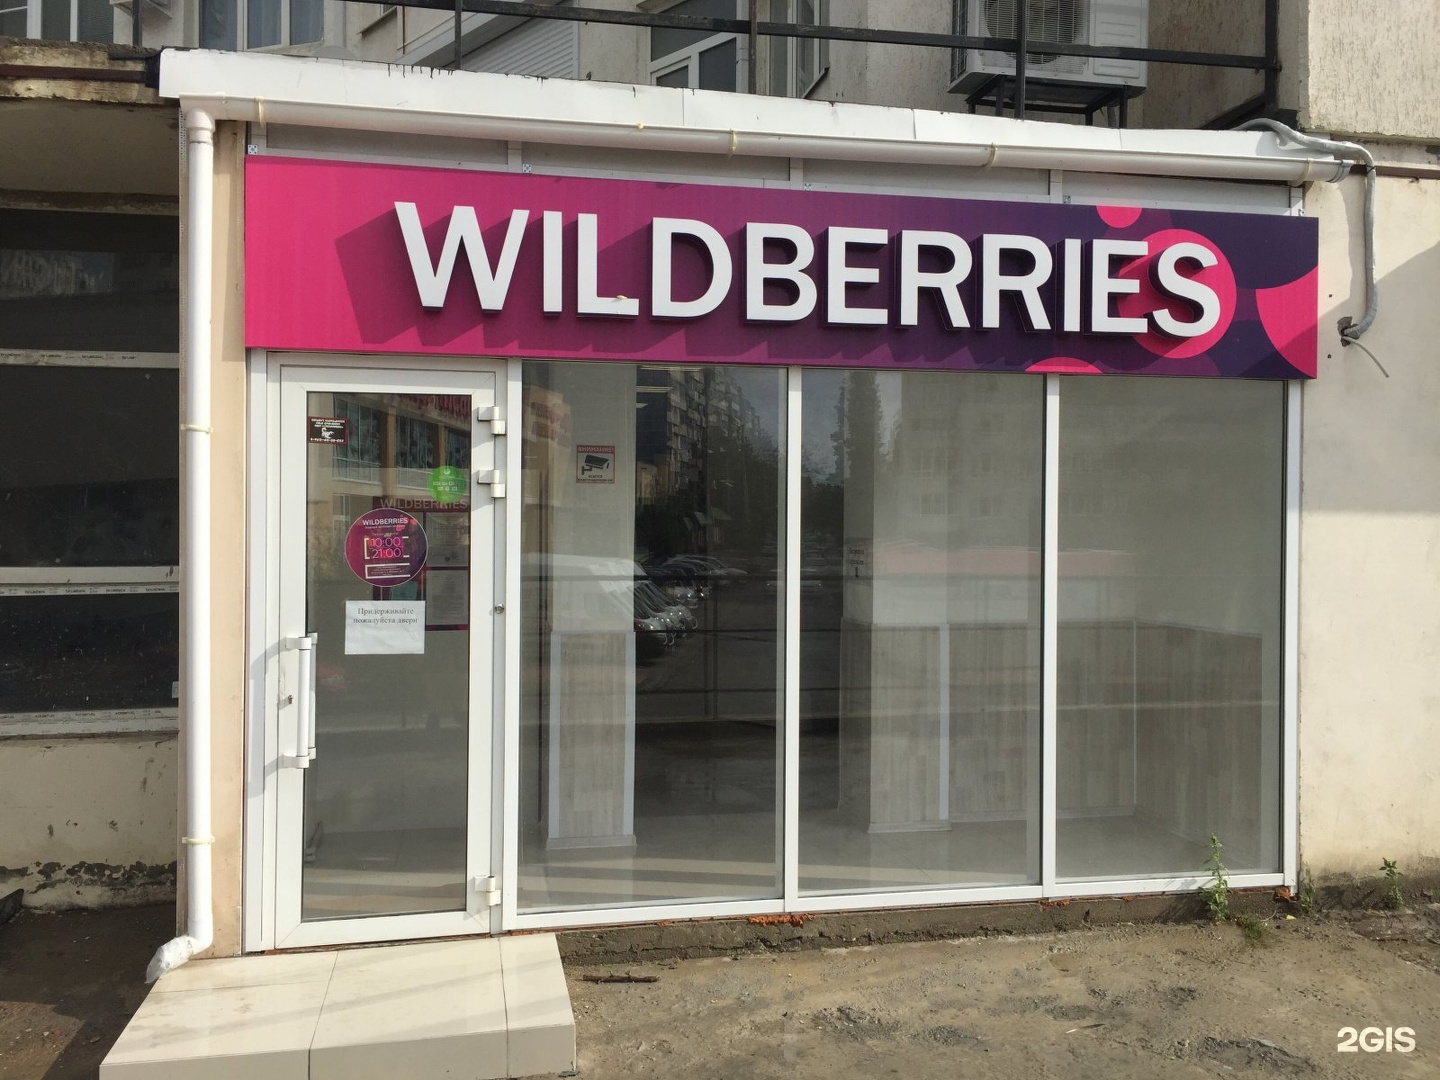 Сайт валберис киров. Wildberries вывеска. Wildberries магазин. Рекламная вывеска магазина. Вывеска Wildberries новая.